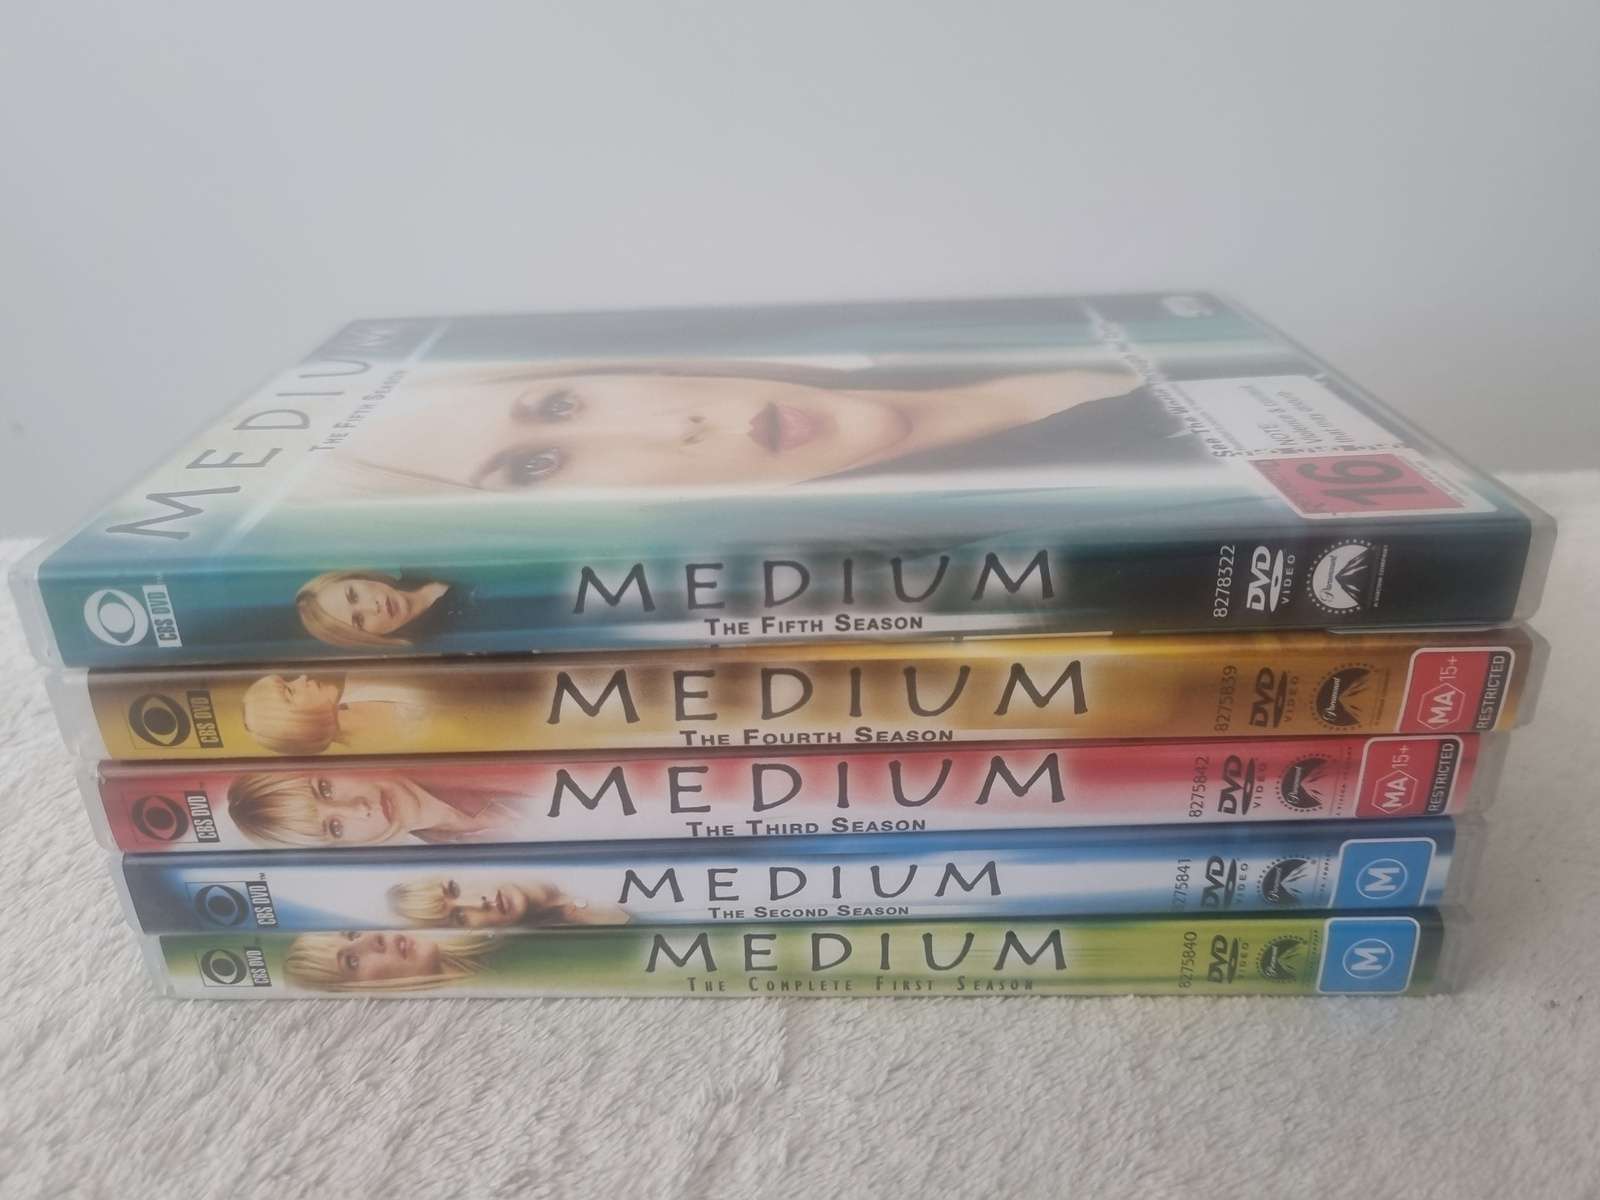 Medium Complete Seasons 1, 2, 3, 4, 5 (DVD)